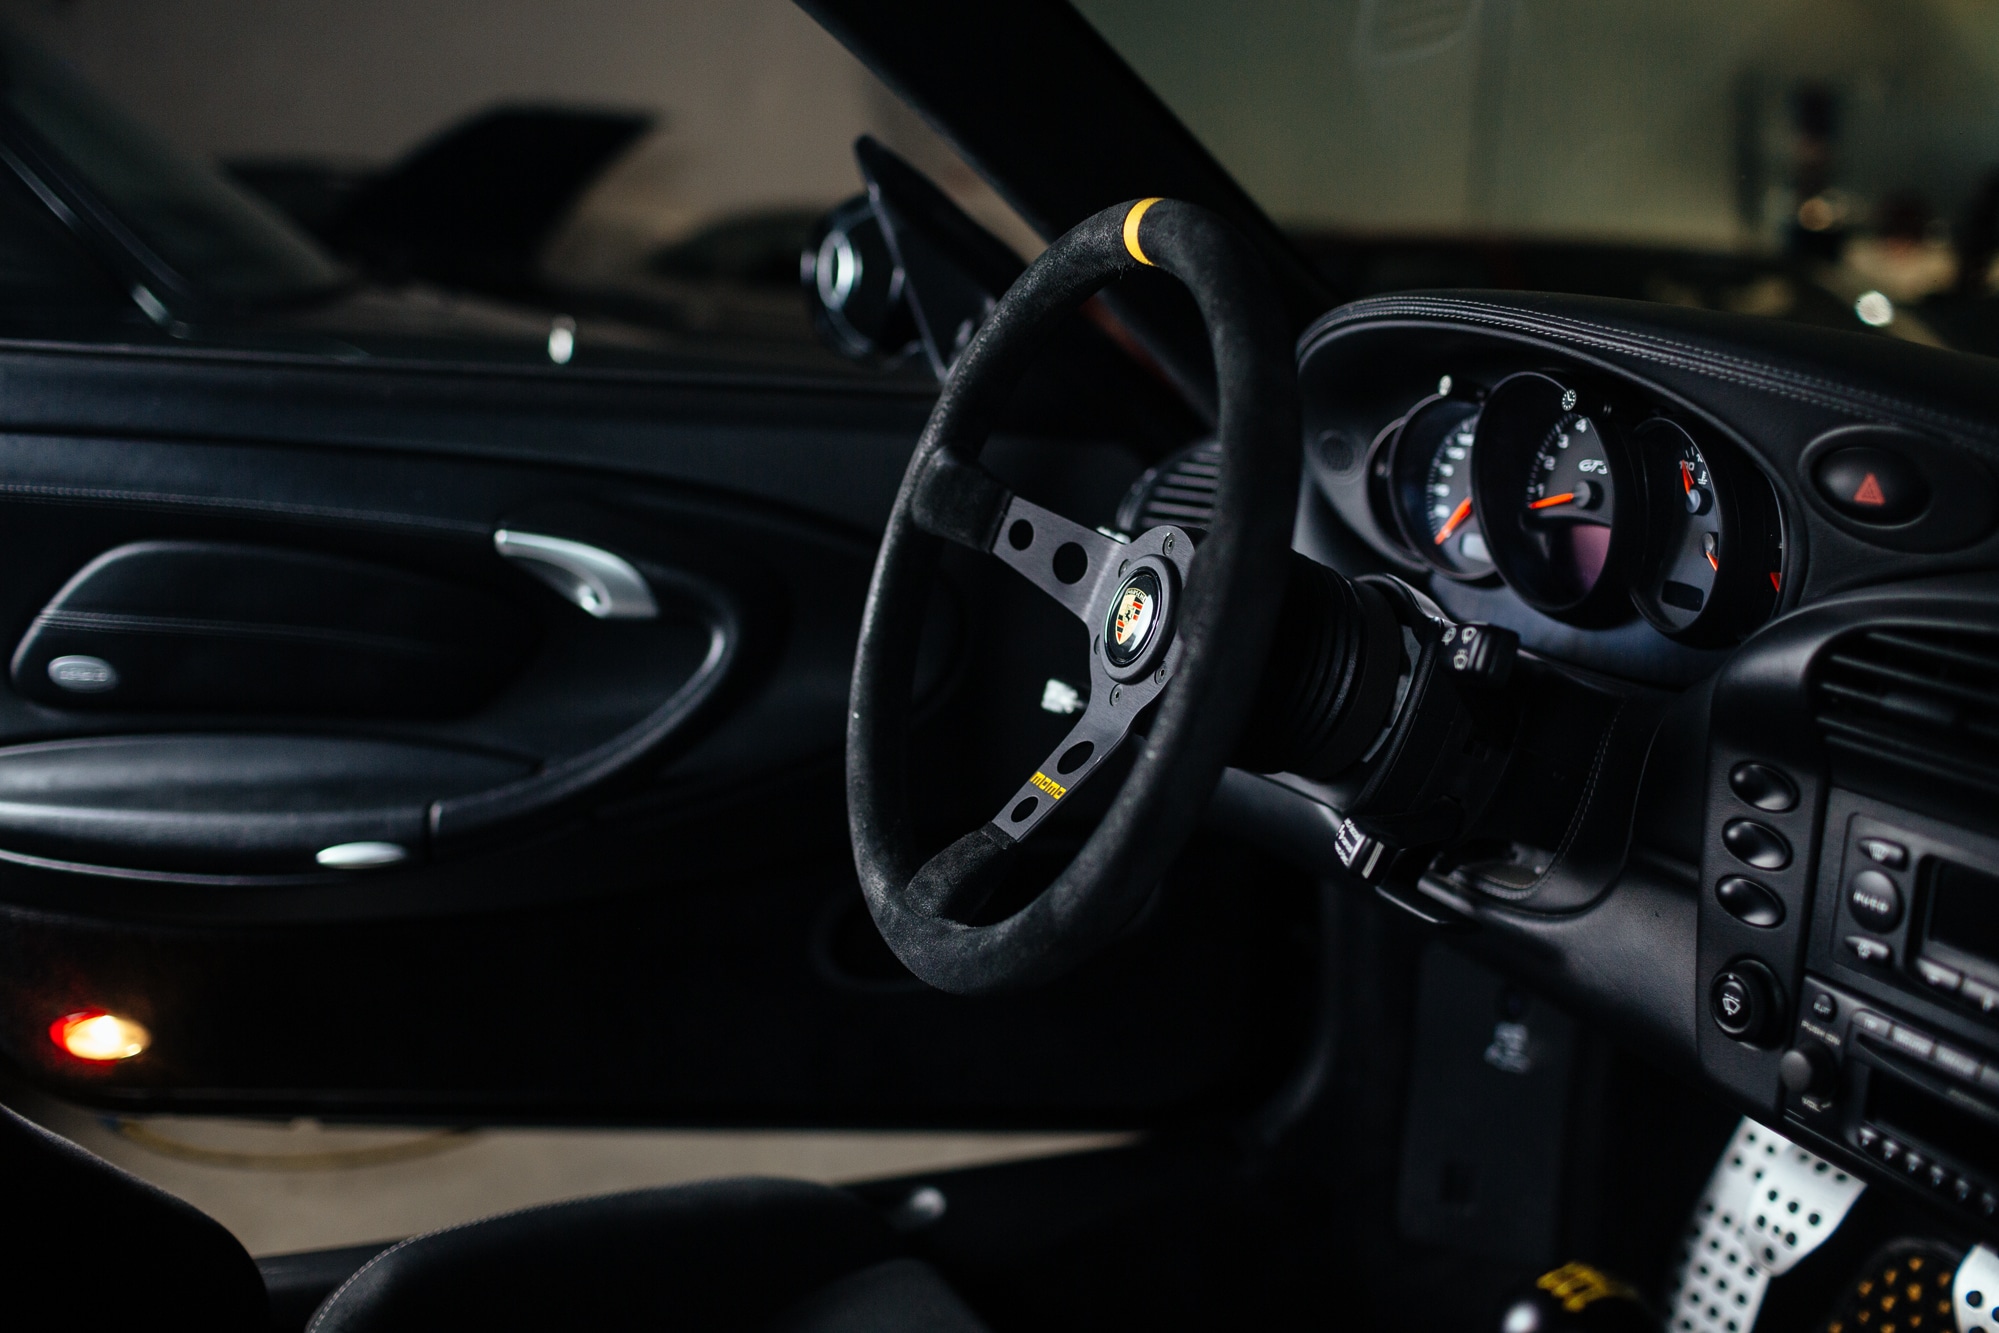 2004 Porsche 911 GT3 (996.2) | Advan GTs | PCCB | Regeared 6 Spd | Fabspeed Headers | Clean History w/Service Records| 44K miles |1 of 69